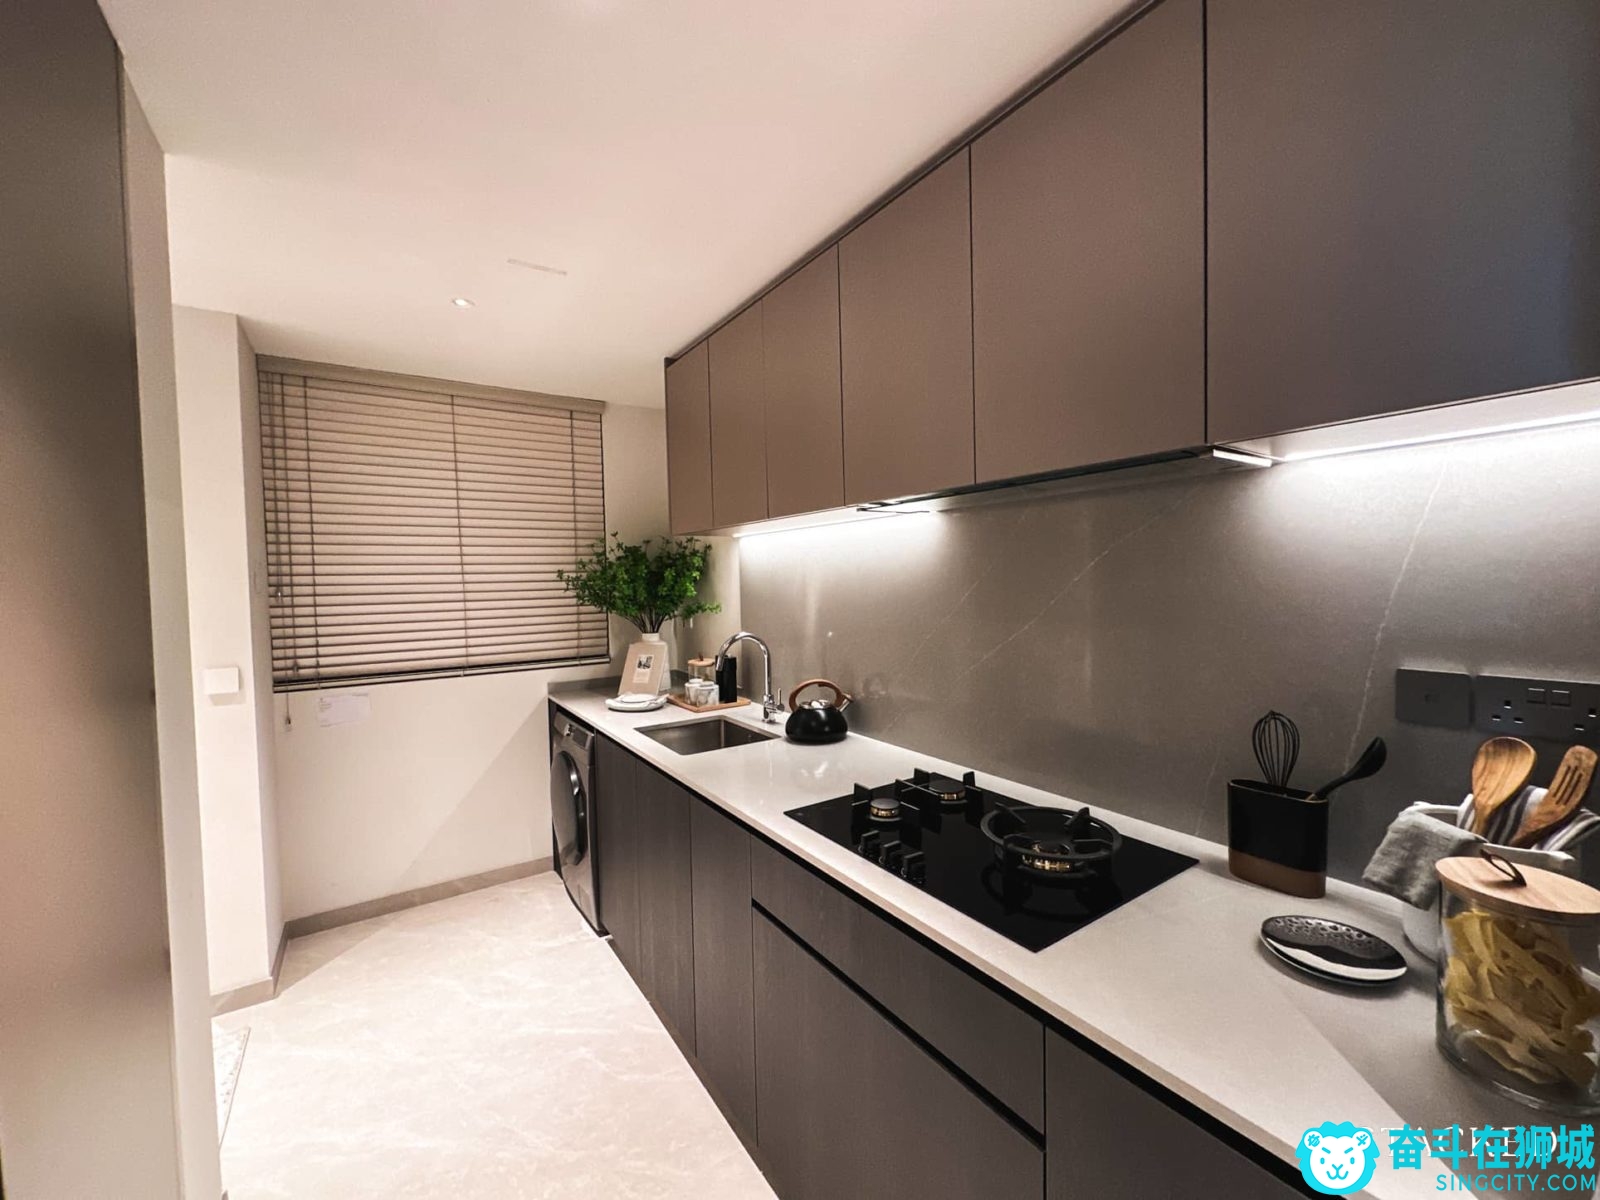 the-continuum-3-bedroom-premier-kitchen-1-1600x1200.jpg